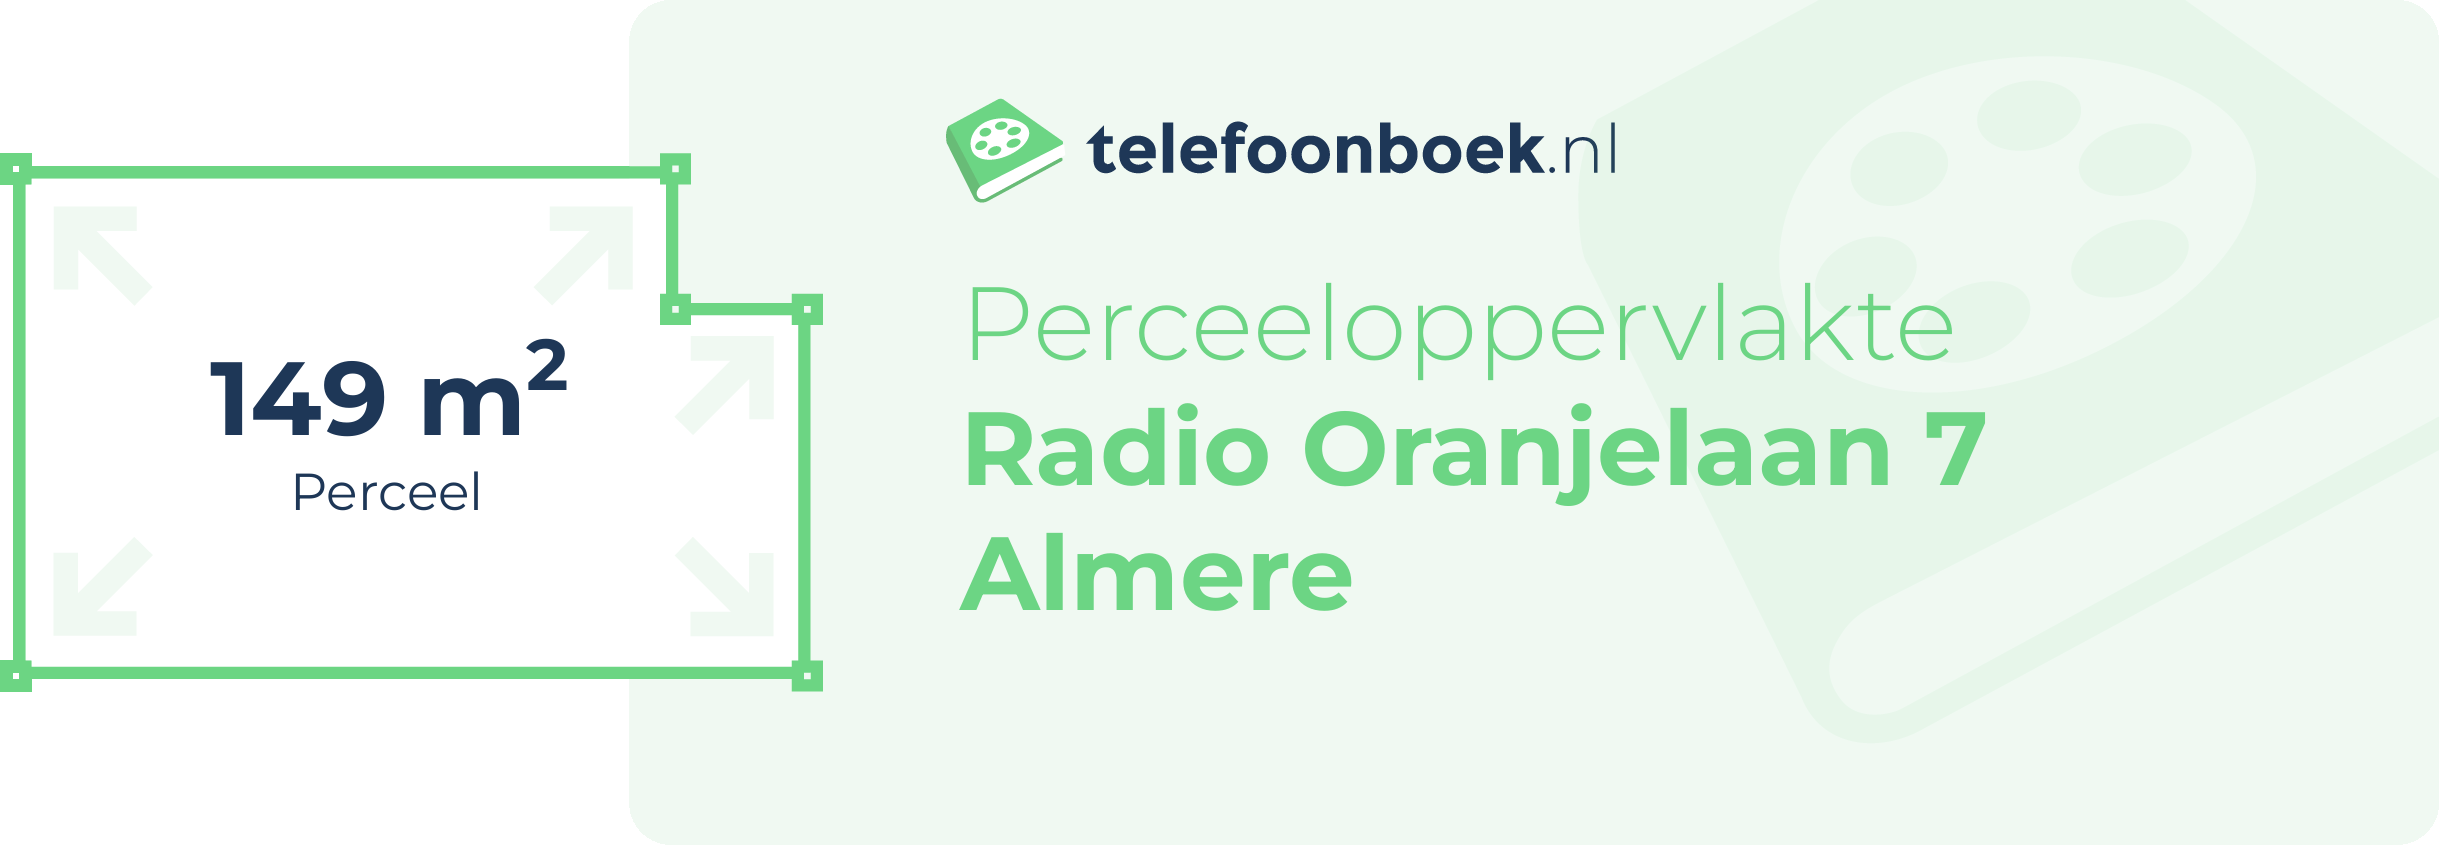 Perceeloppervlakte Radio Oranjelaan 7 Almere